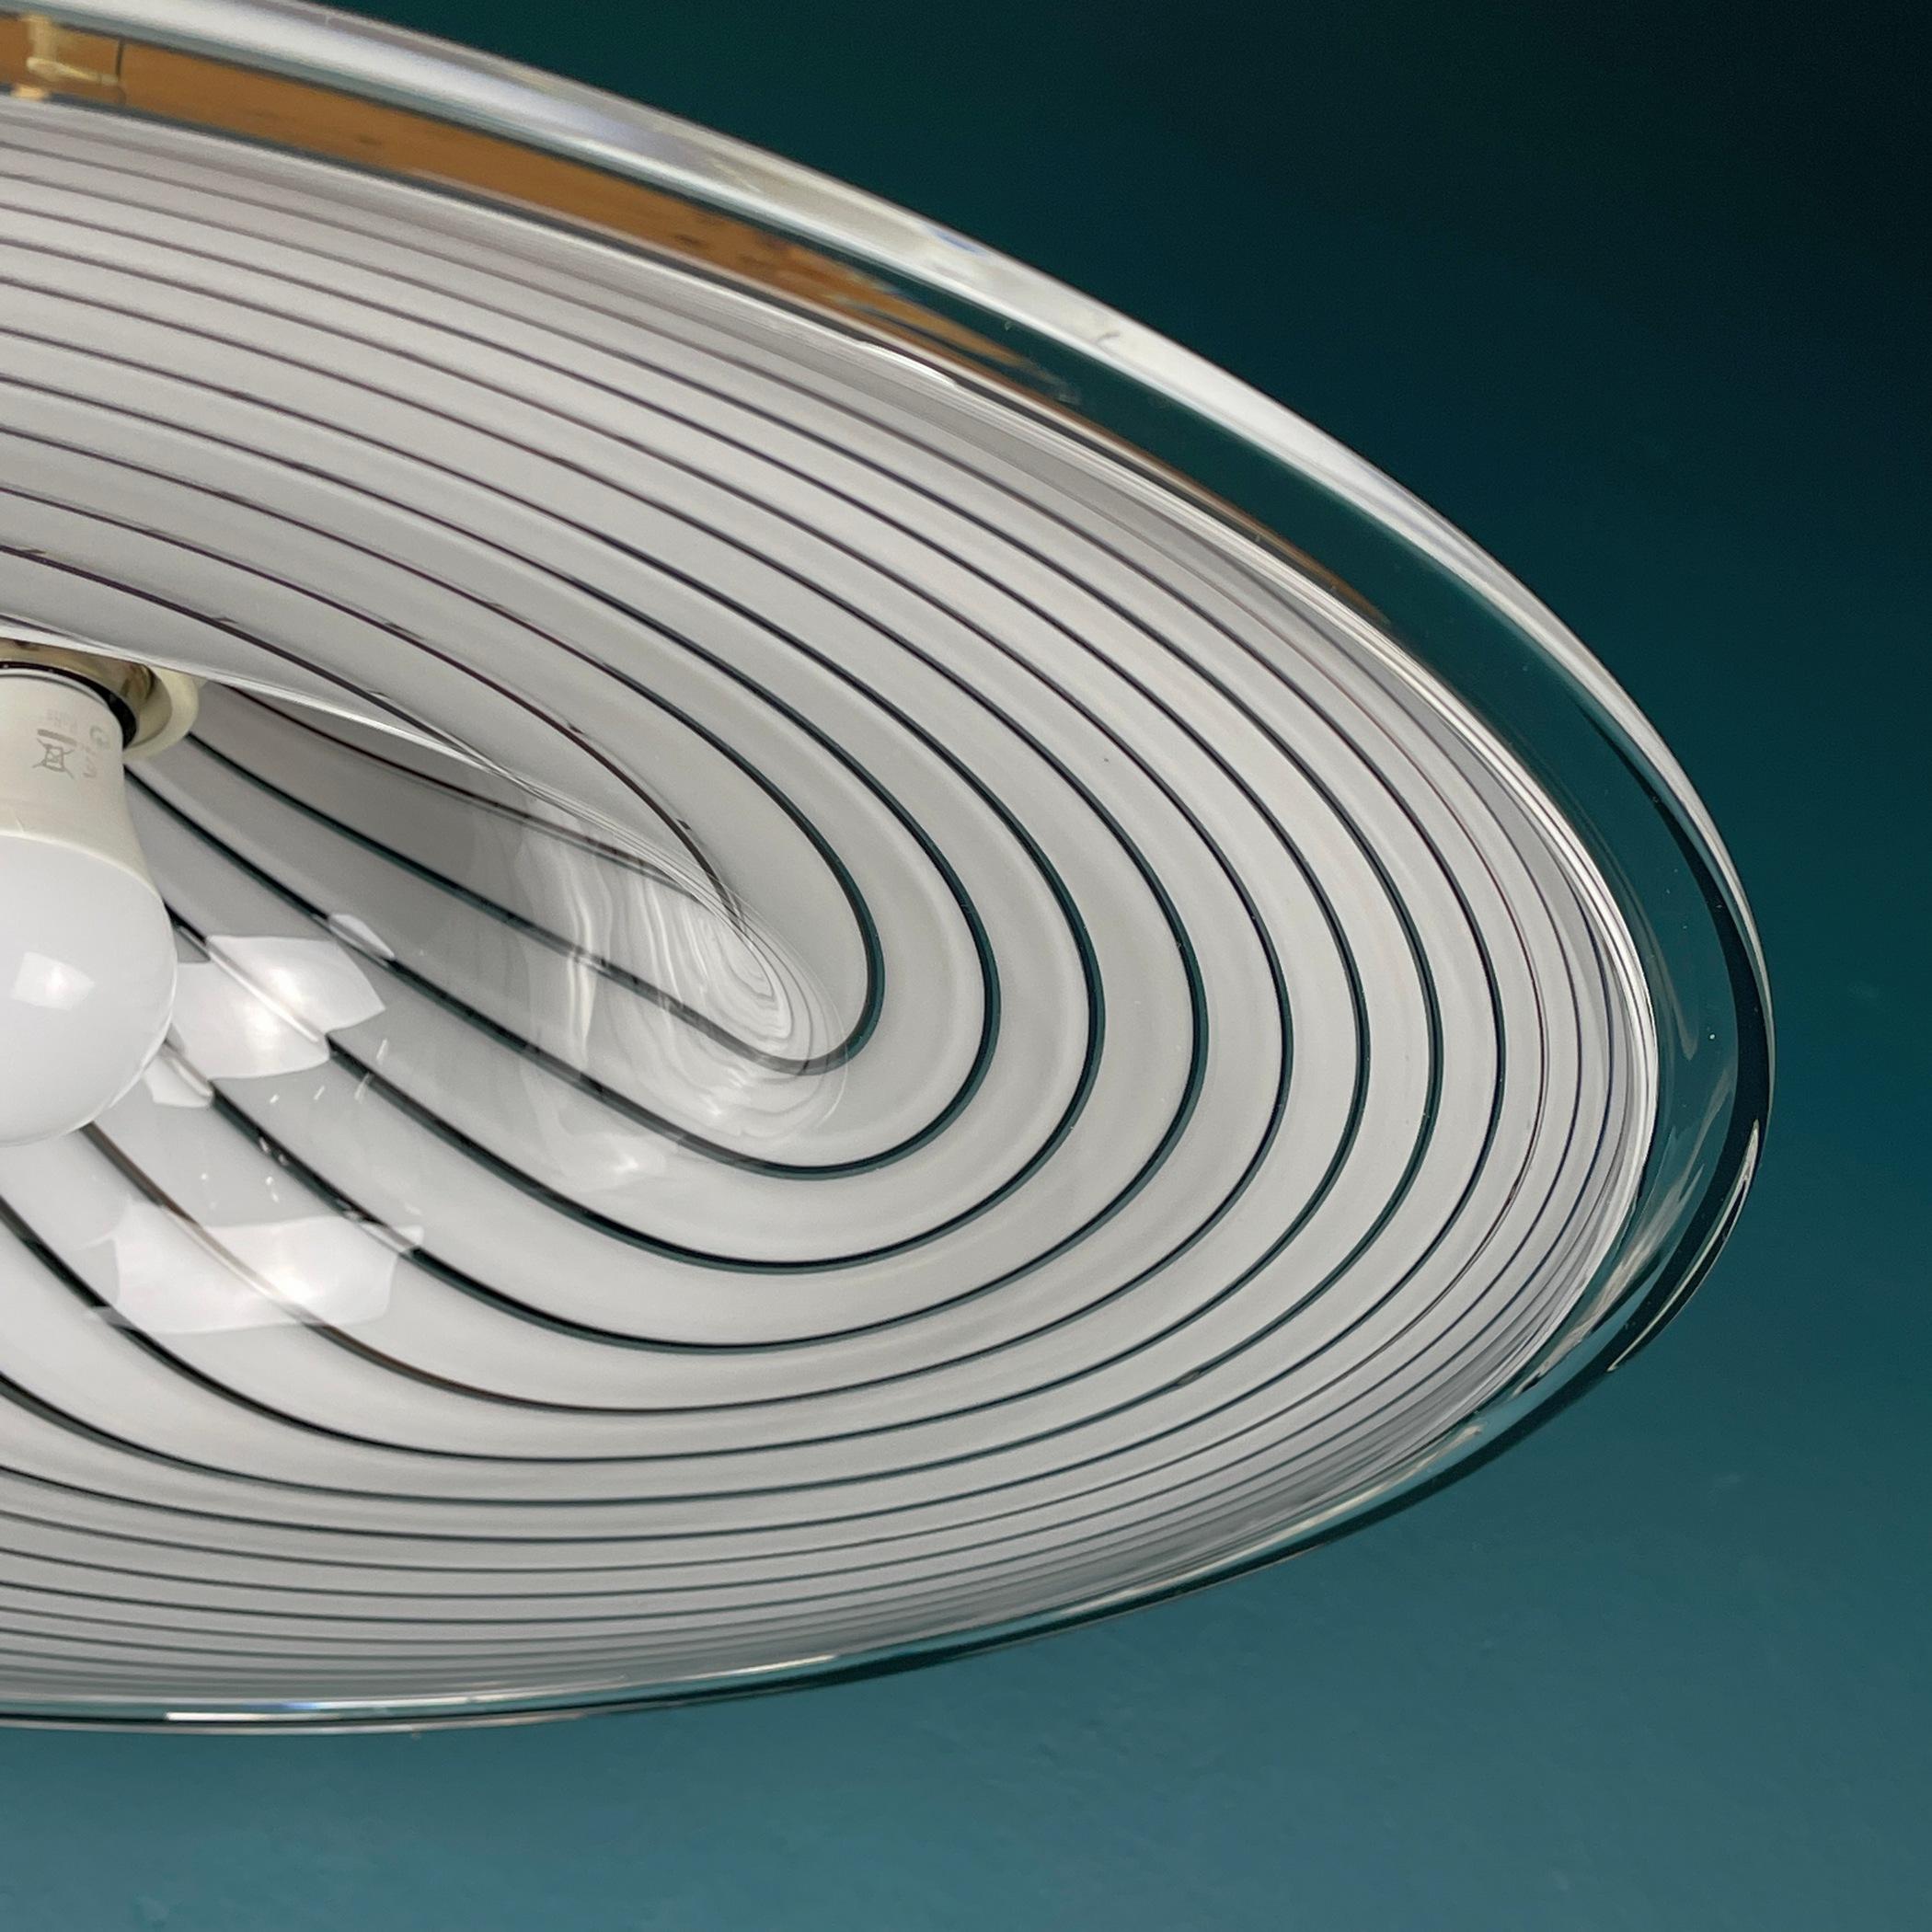 Classic Swirl Murano Glass Pendant Lamp, Italy, 1970s For Sale 7